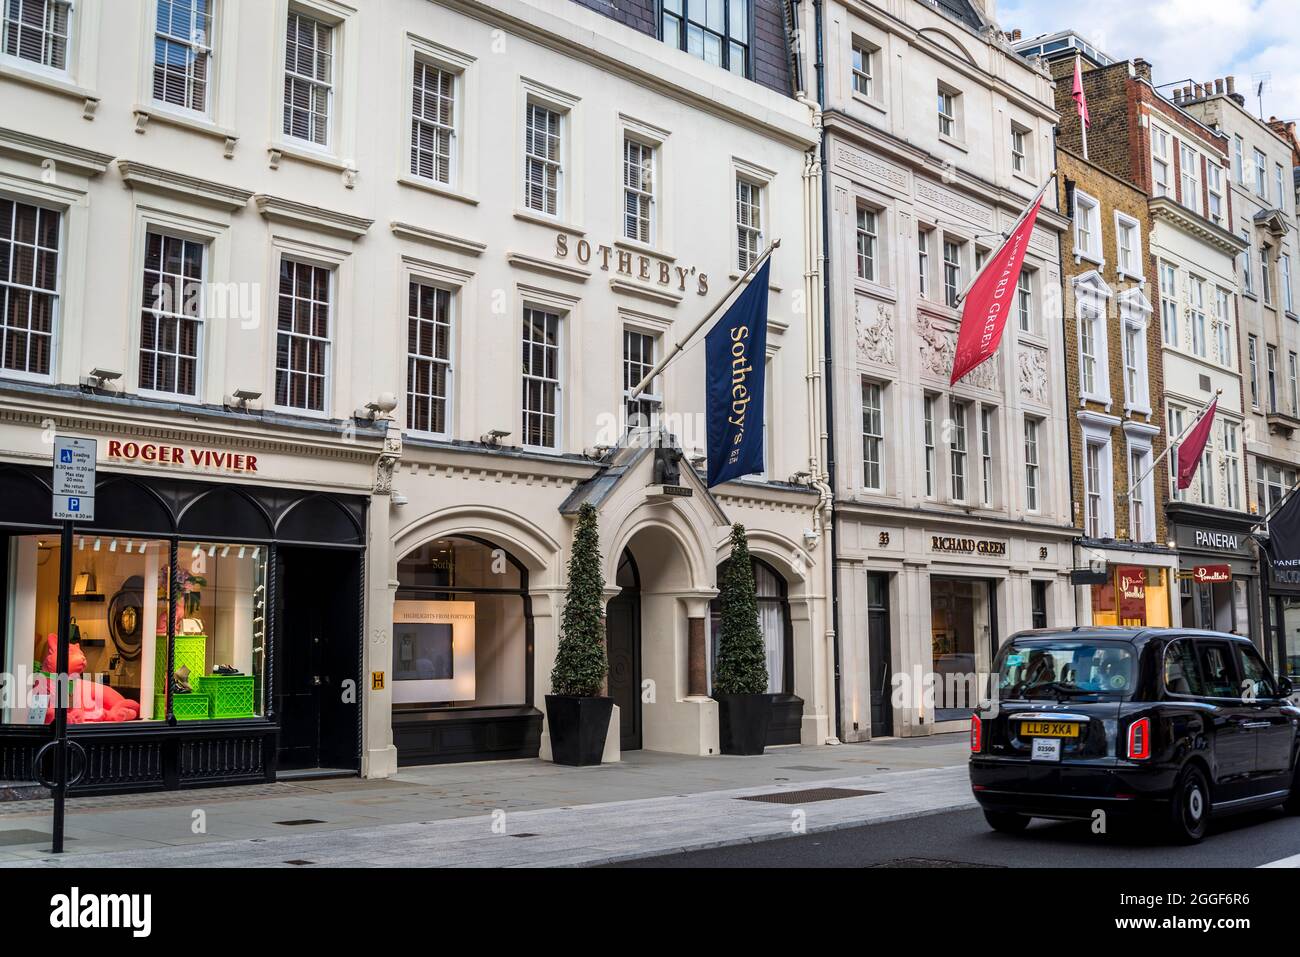 Sotheby's - famosa casa de subastas de arte, New Bond Street, Londres, Inglaterra, Reino Unido Foto de stock